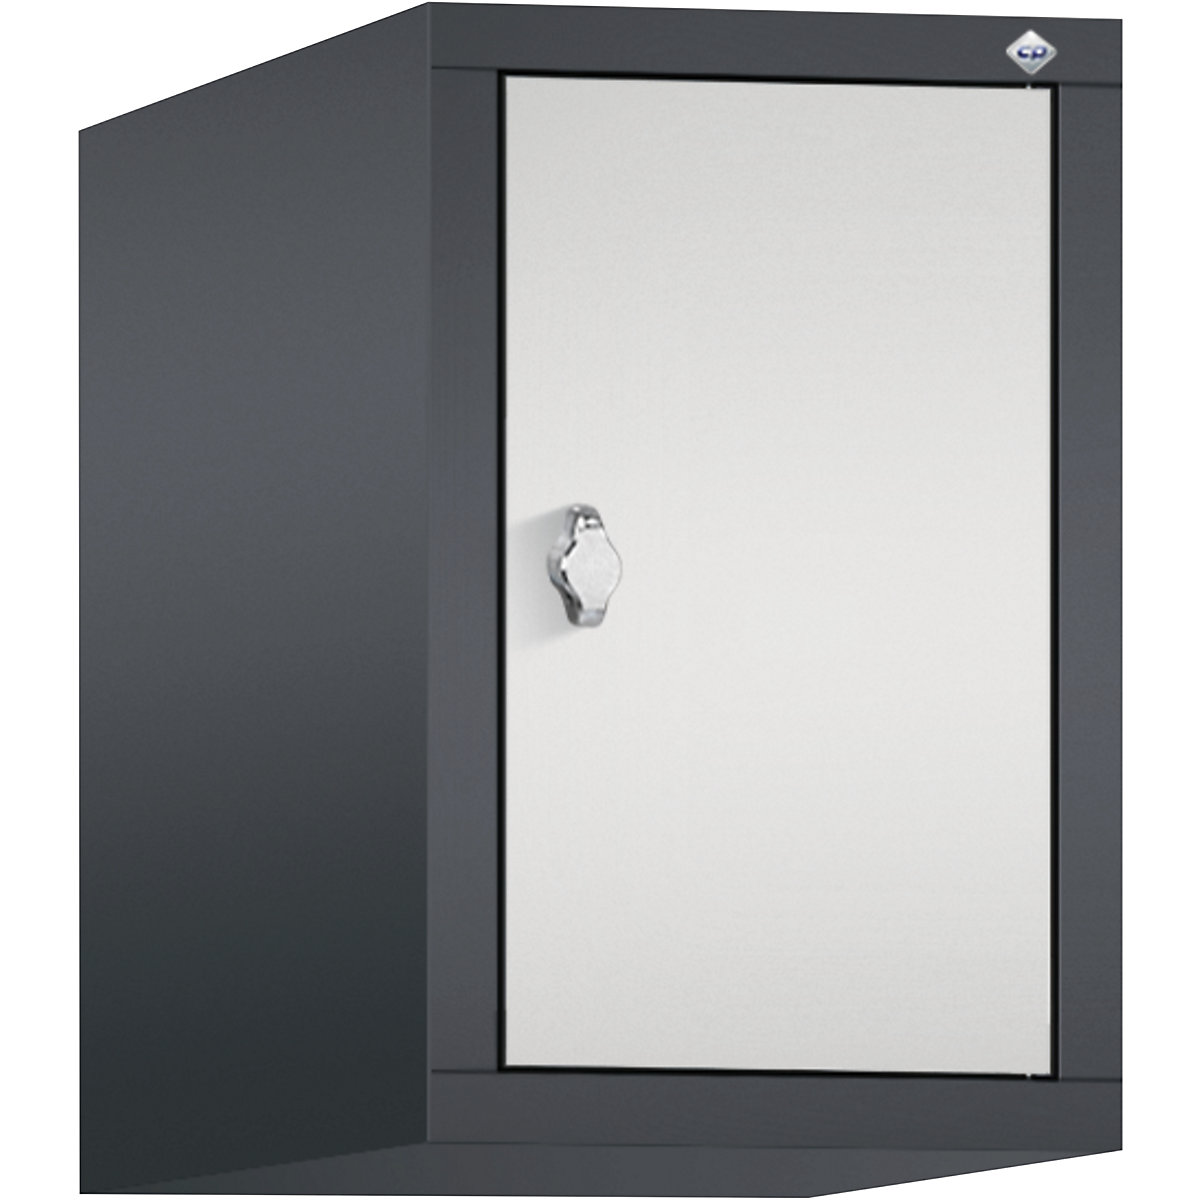 C+P – Altillo CLASSIC, 1 compartimento, anchura de compartimento 300 mm, gris negruzco / gris luminoso